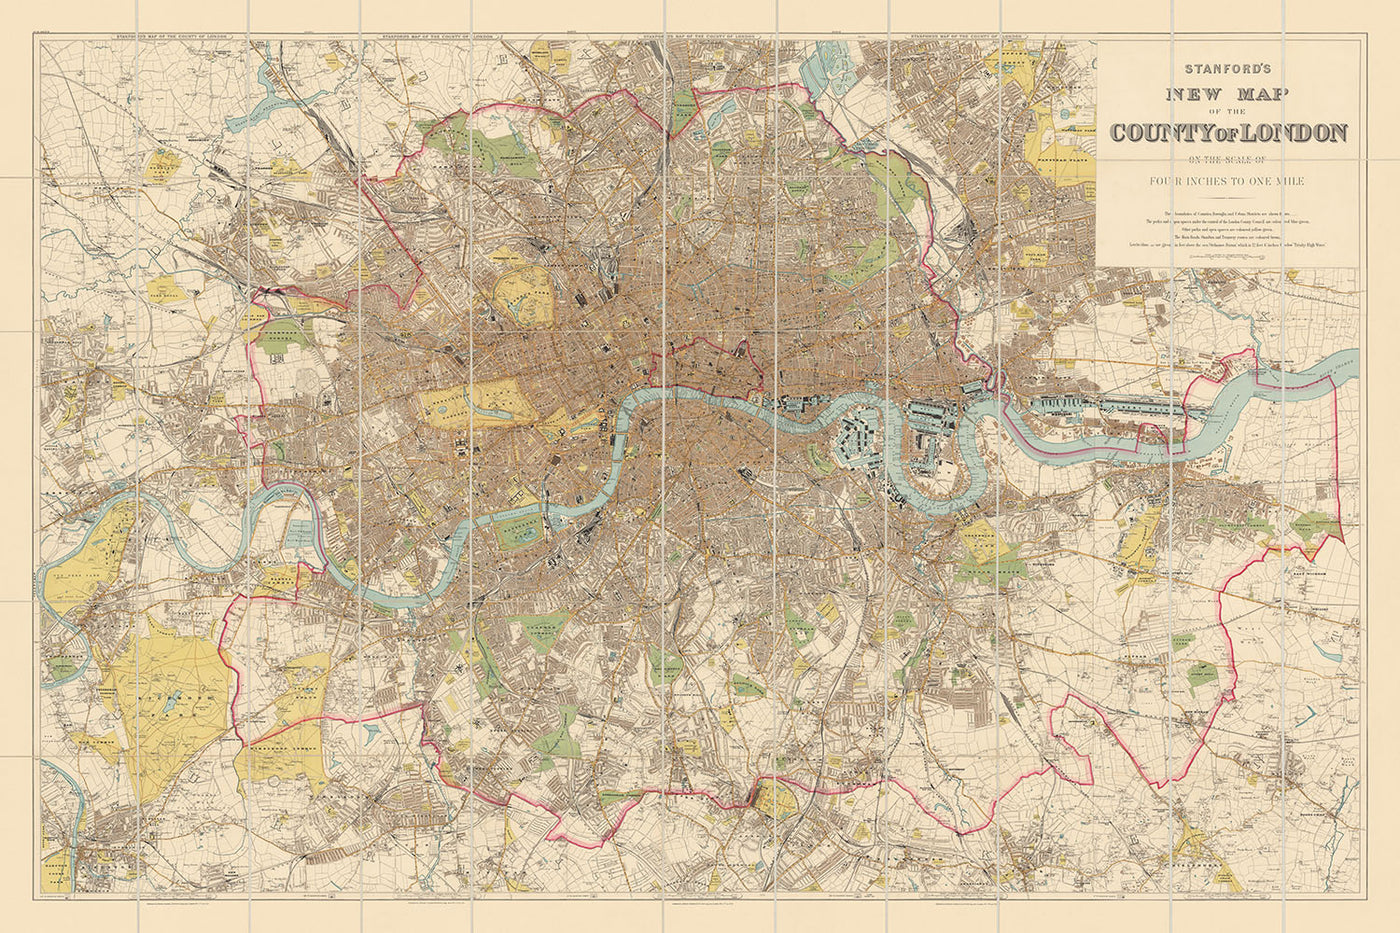 Mapa antiguo de Londres de Stanford, 1905: Palacio de Buckingham, San Pablo, Támesis, Casas del Parlamento, Hyde Park